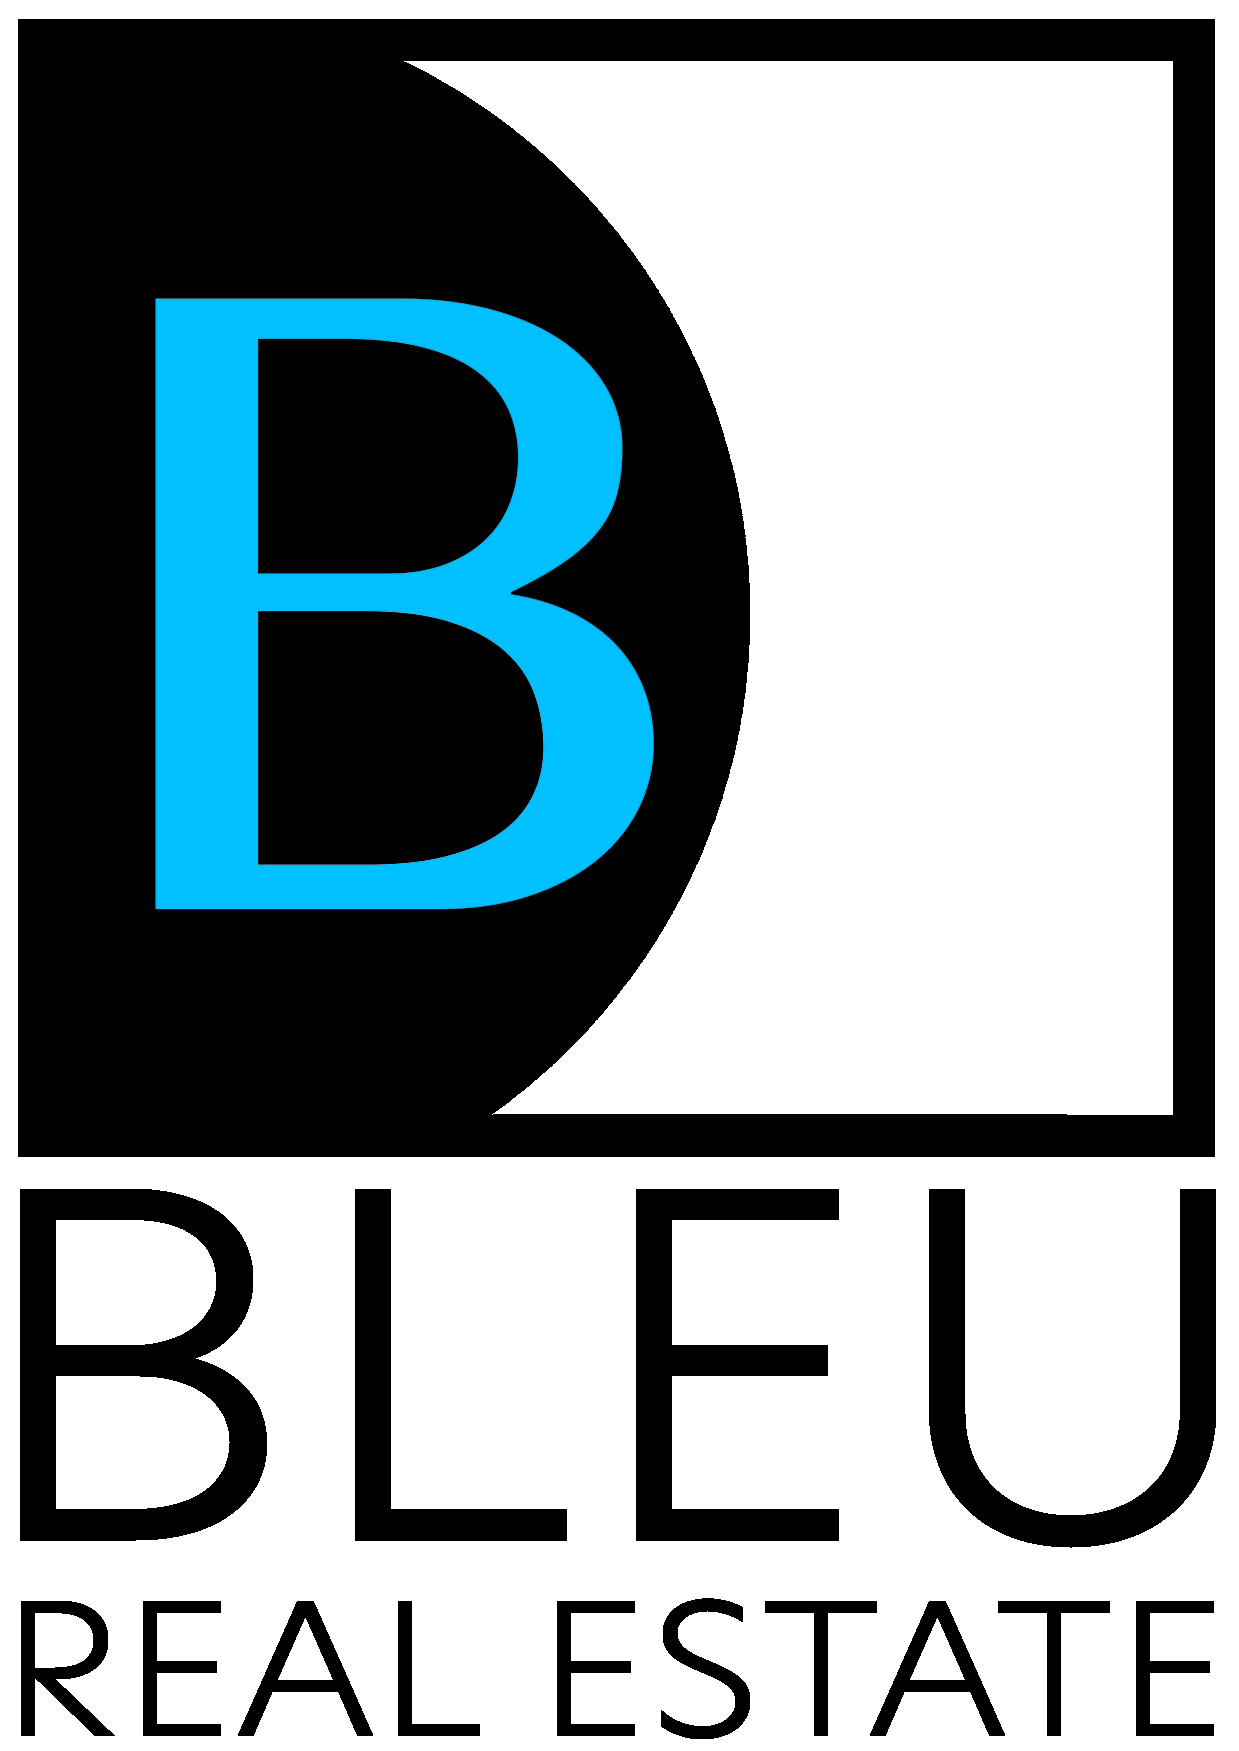 BLEU Real Estate Logo - Black Vertical